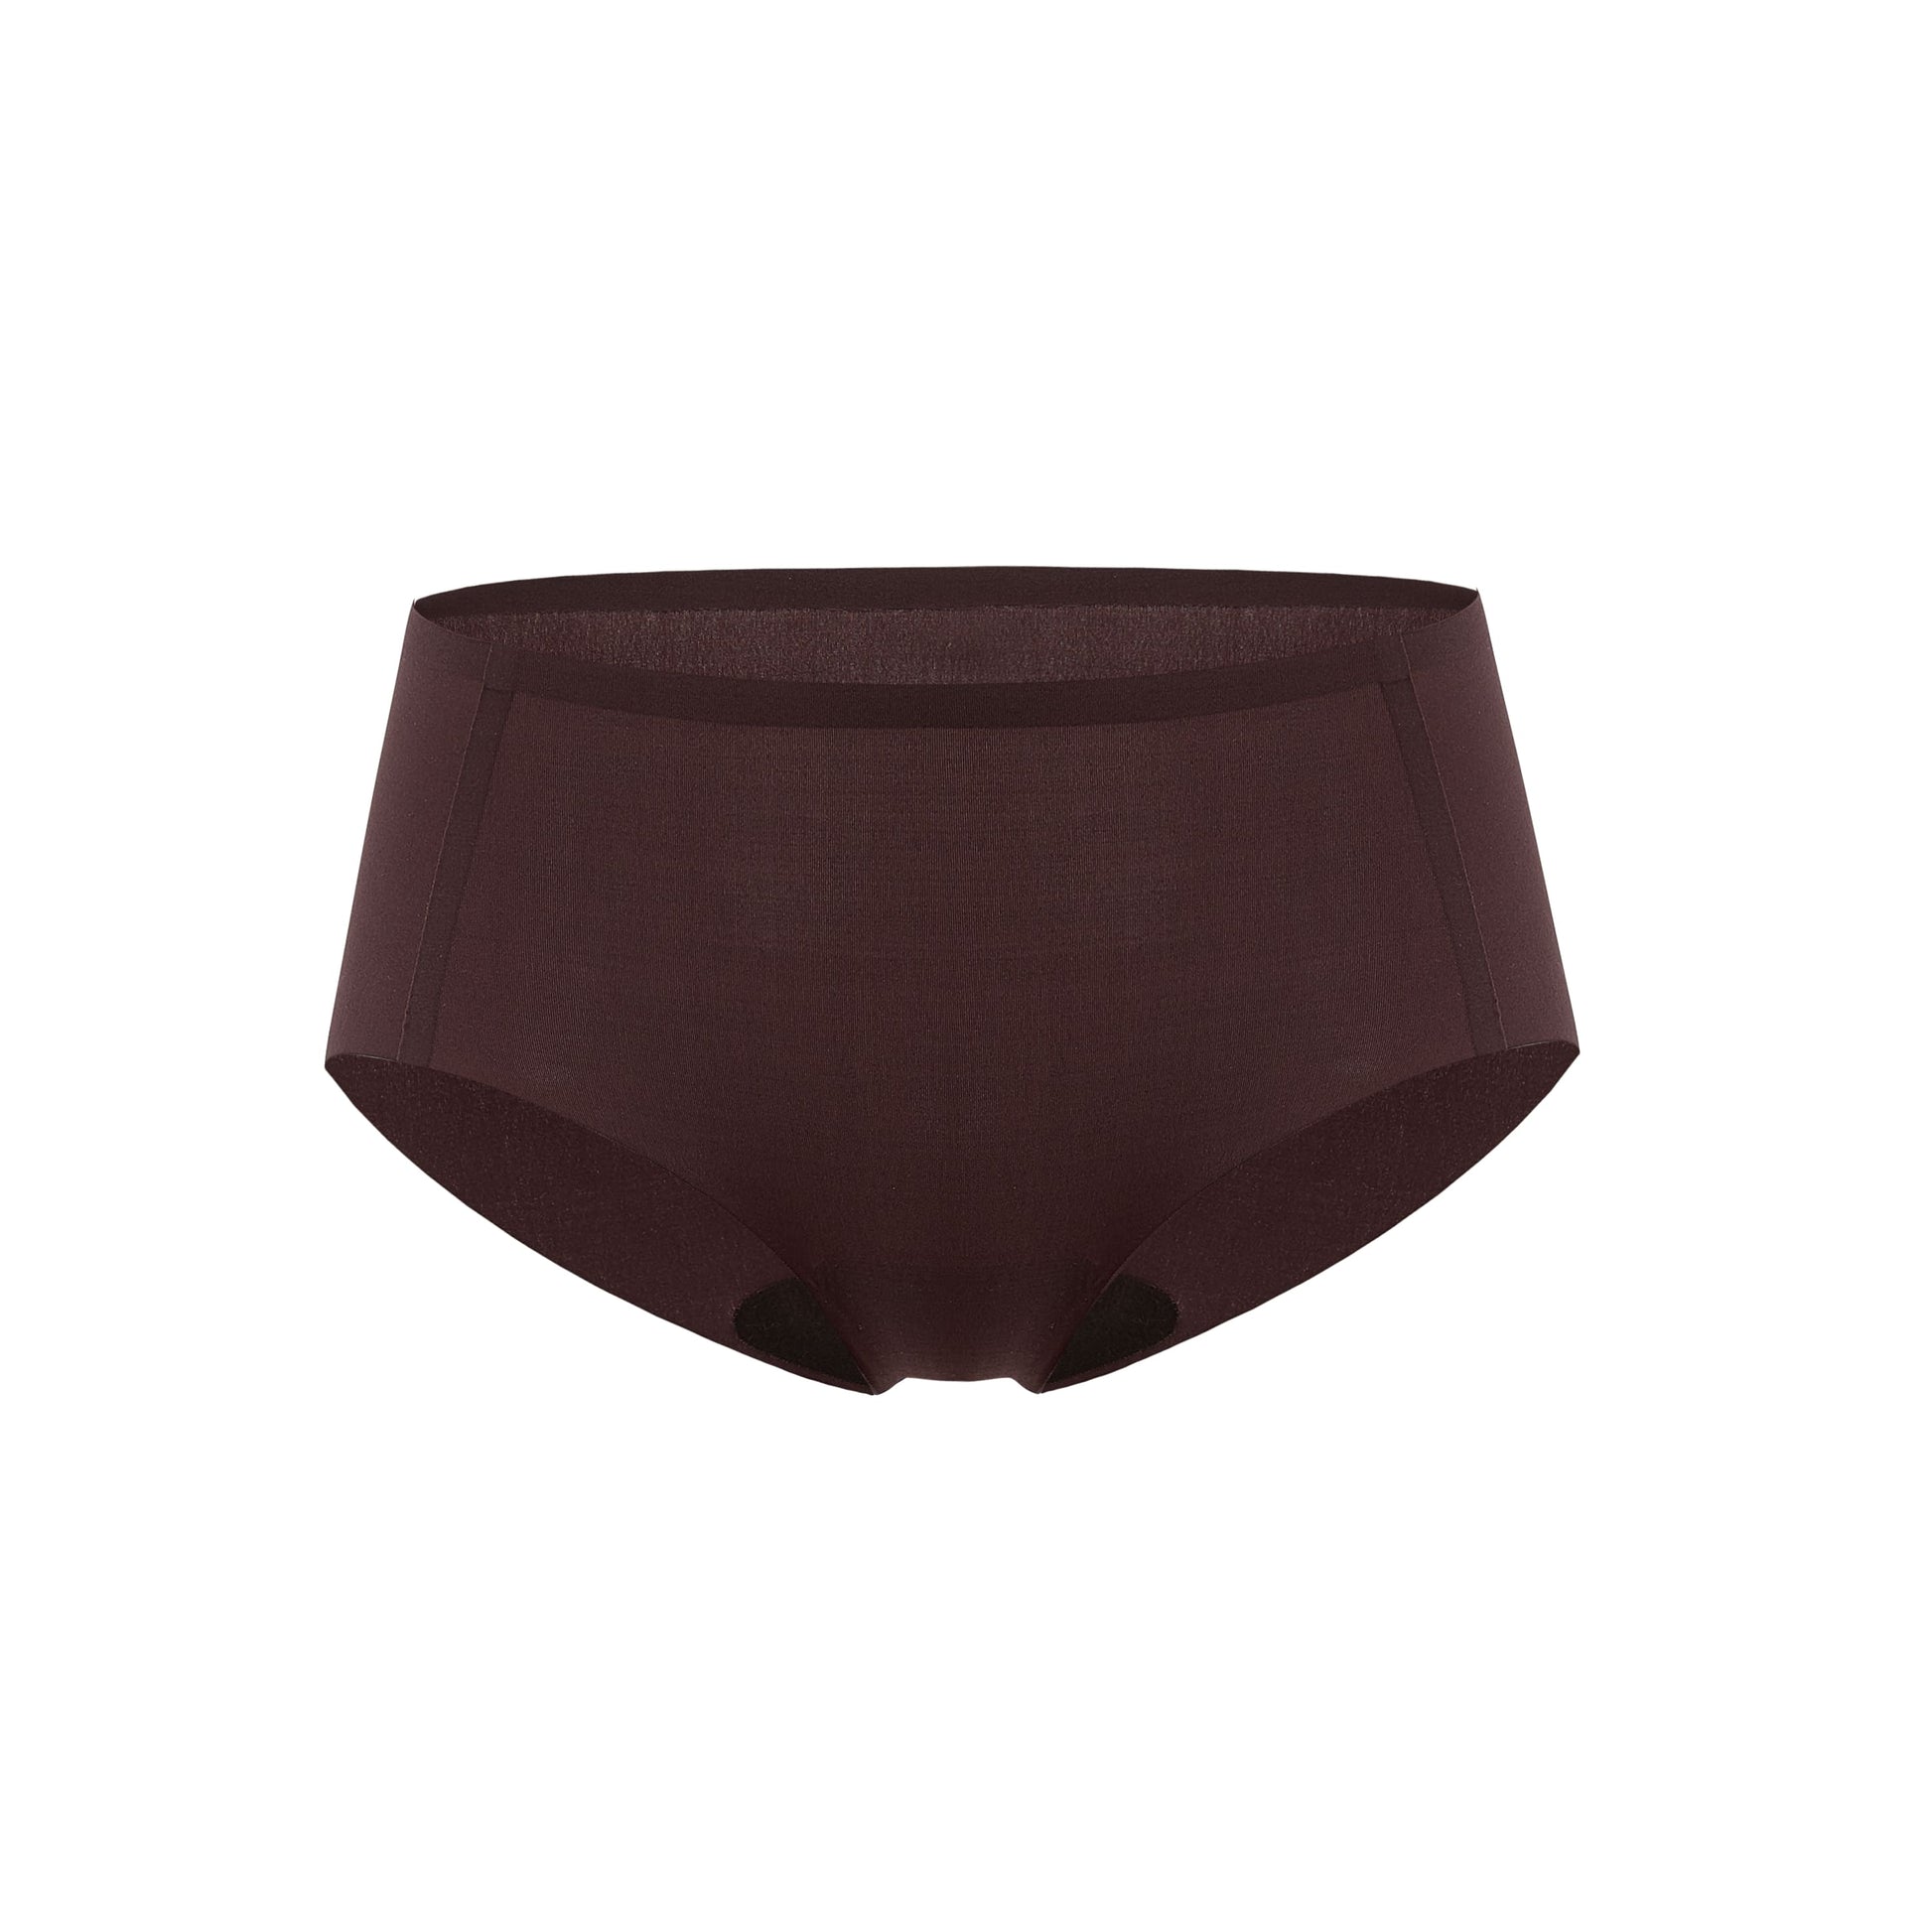 Flat lay image of brown underwear